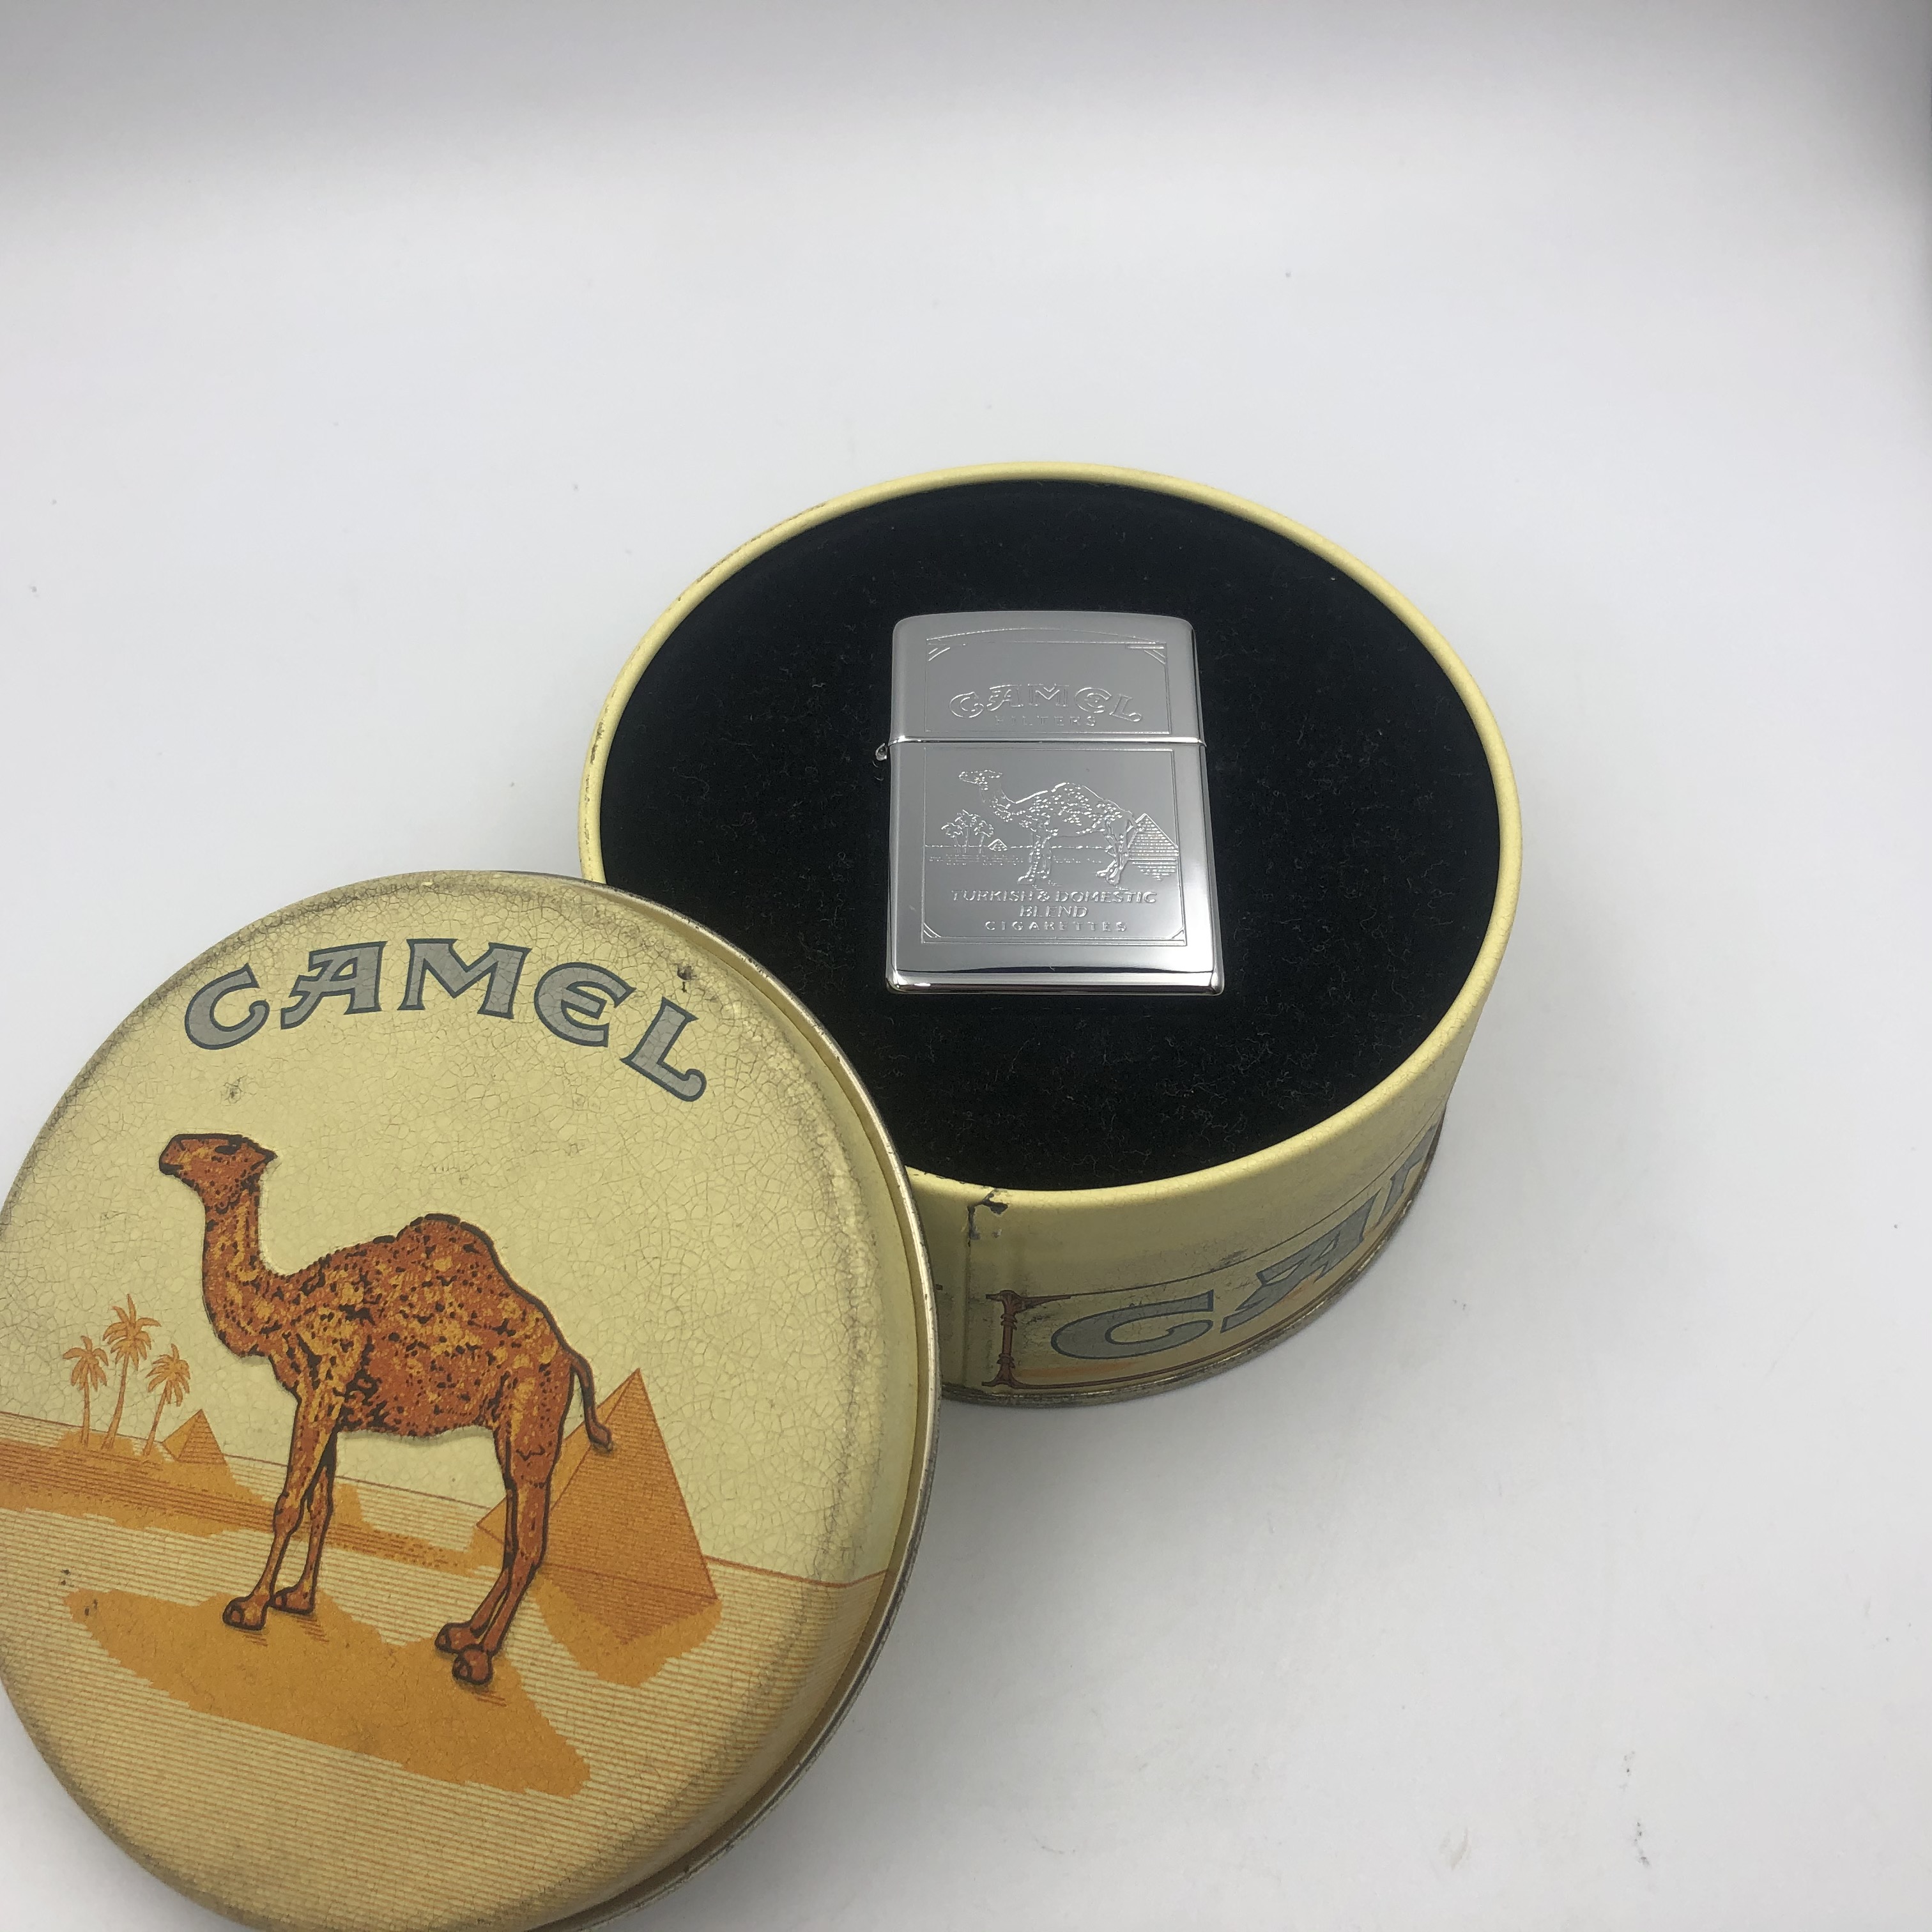 ZIPPO x CAMEL ライター ジッポ キャメル お買取り ーブランド 高価 